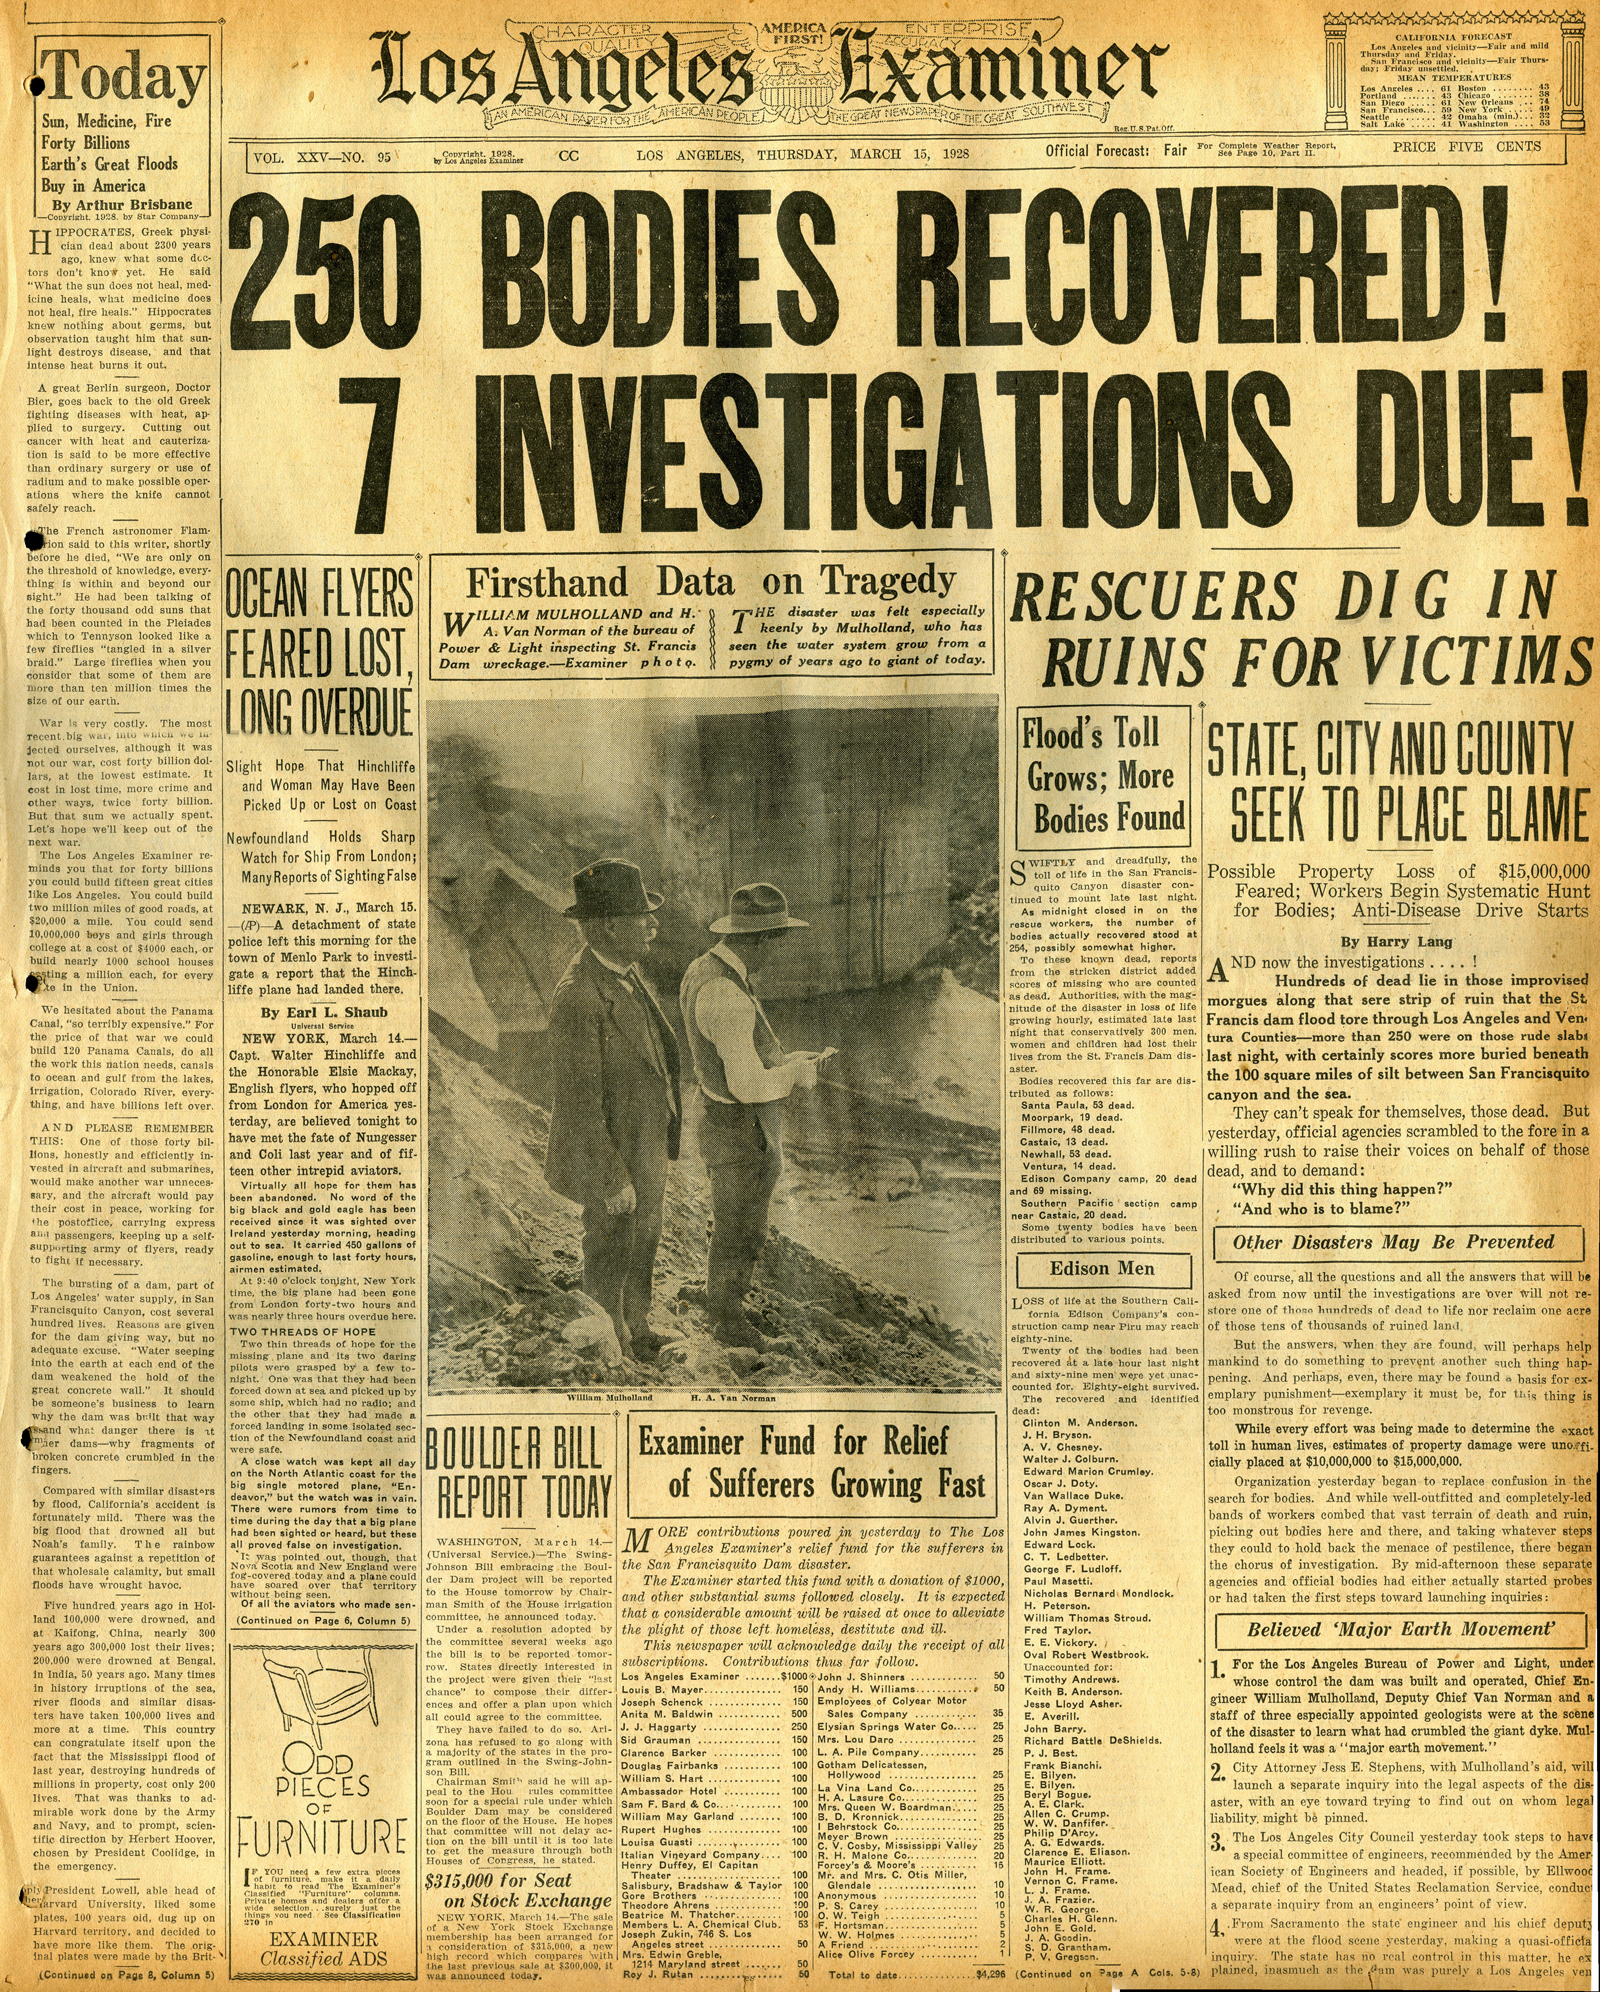 St. Francis Dam Disaster

LOS ANGELES EXAMINER

Los Angeles, California | Thursday, March 15, 1928